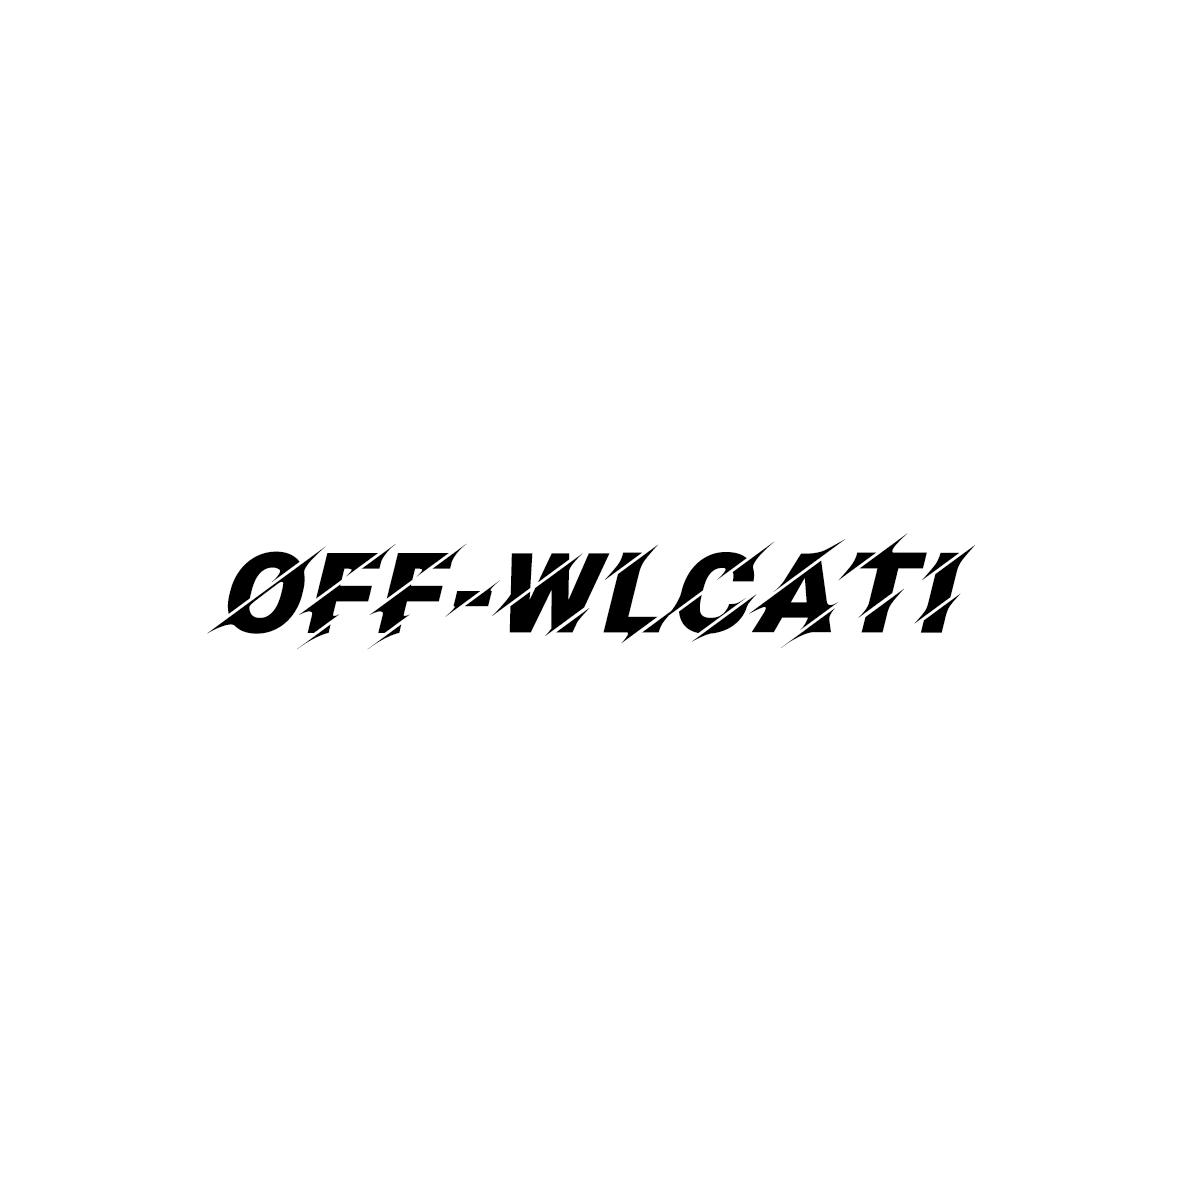 OFF-WLCATI